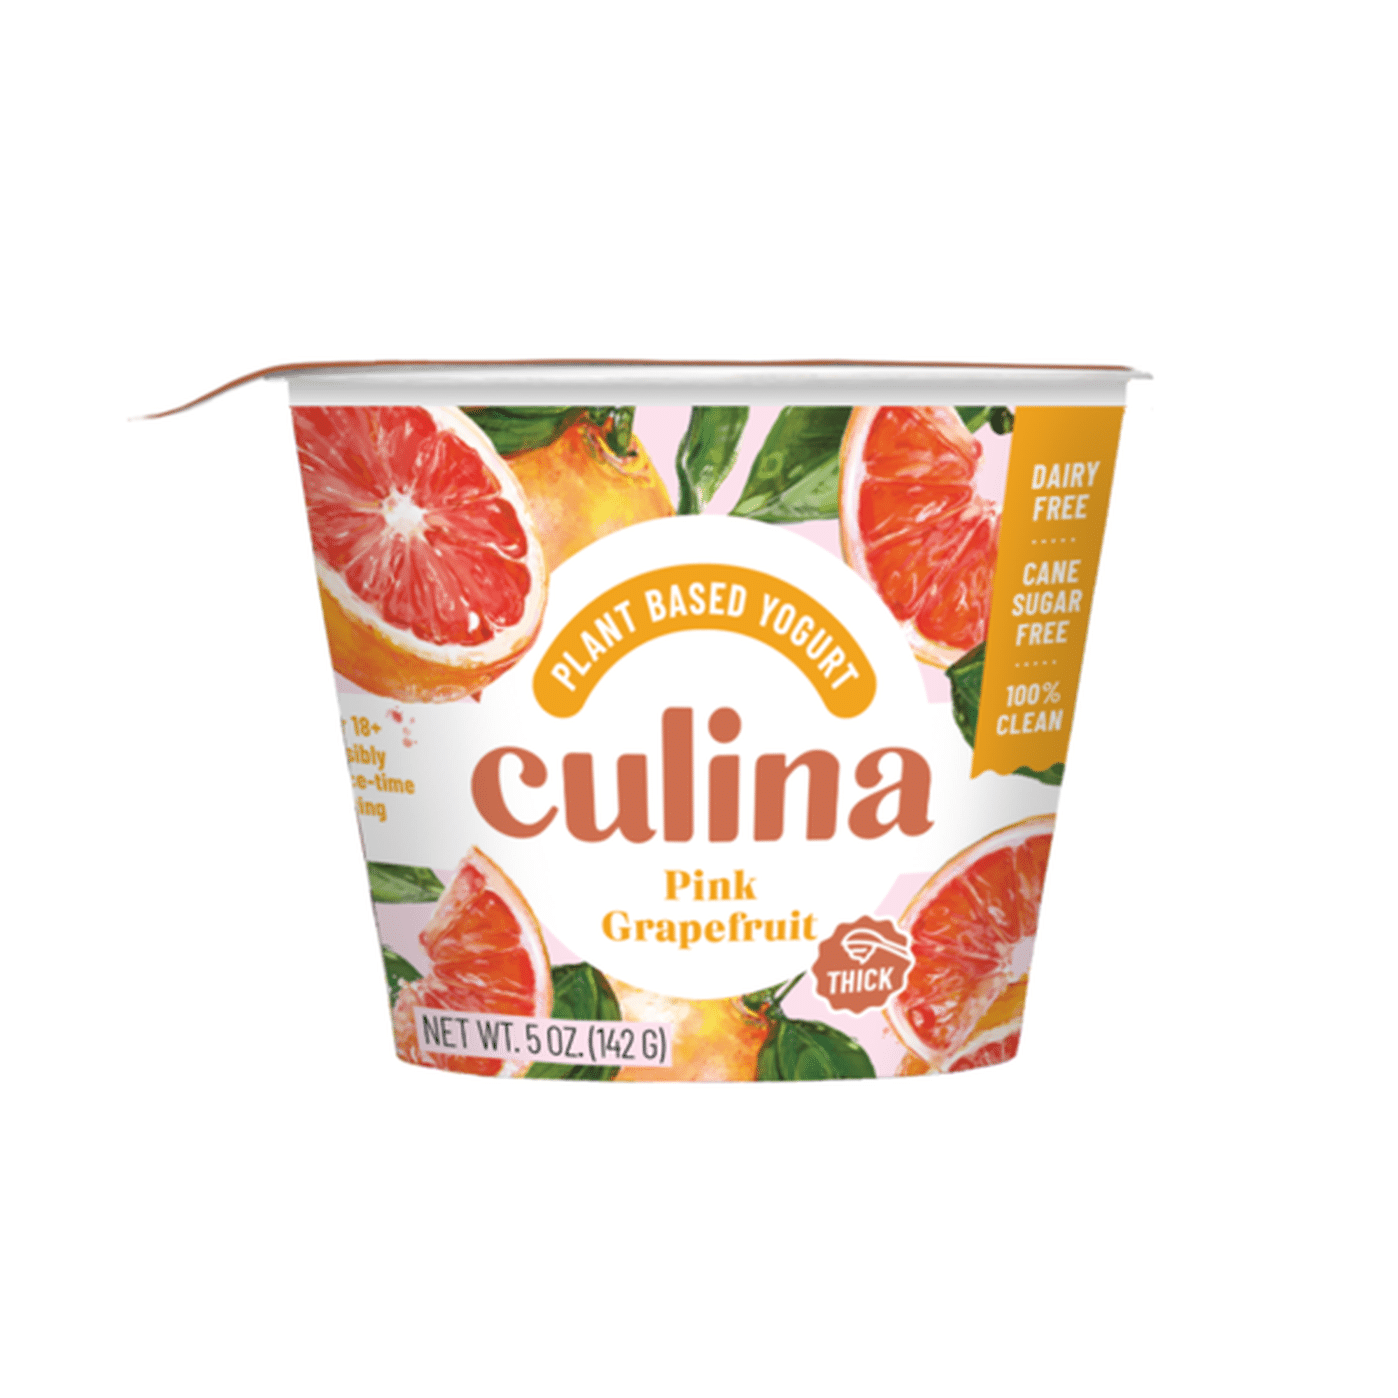 culina-pink-grapefruit-plant-based-yogurt-5-oz-delivery-or-pickup